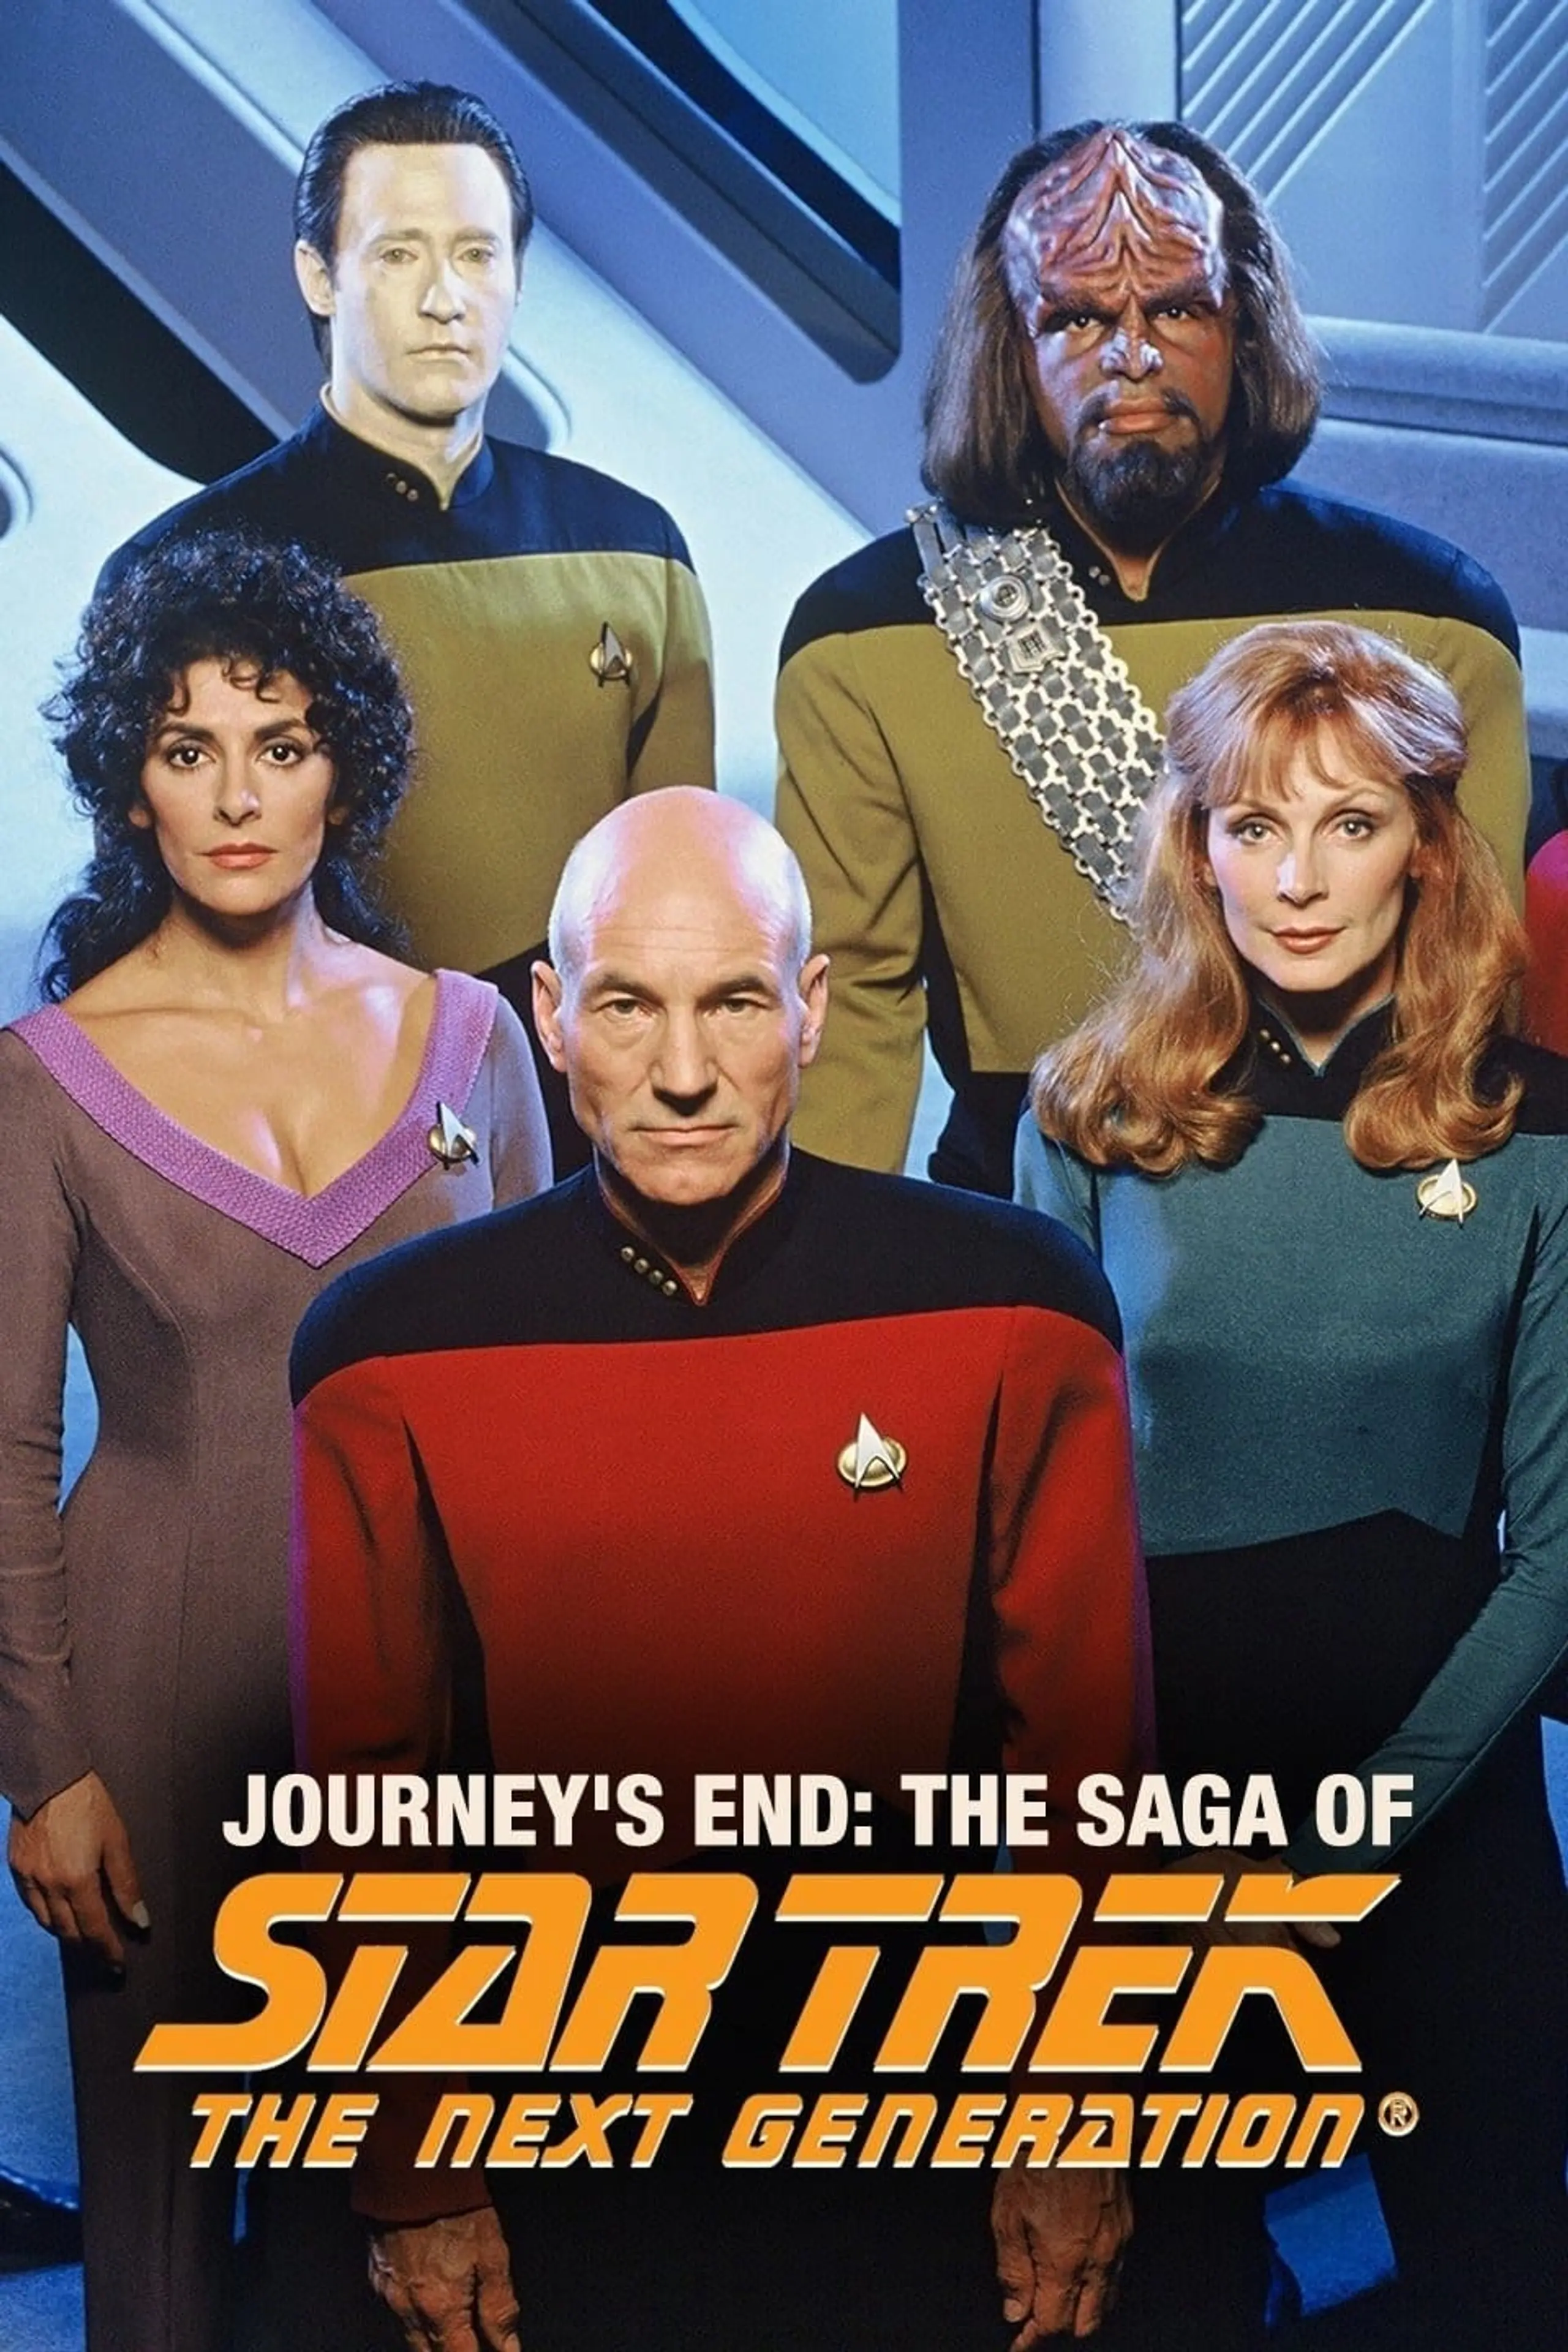 Journey's End: The Saga of Star Trek - The Next Generation